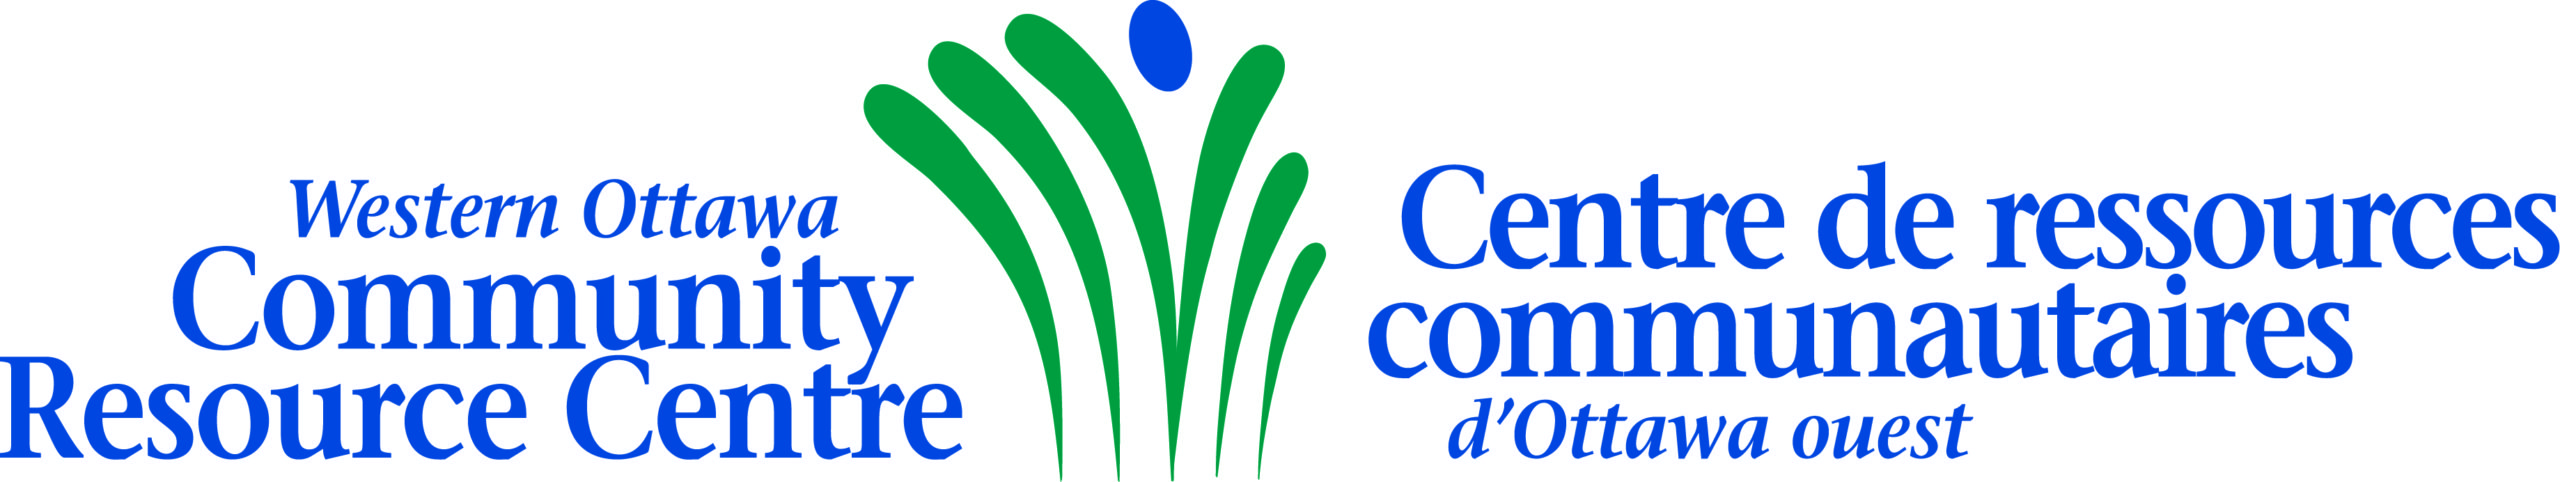 Western Ottawa community Resource Centre Logo